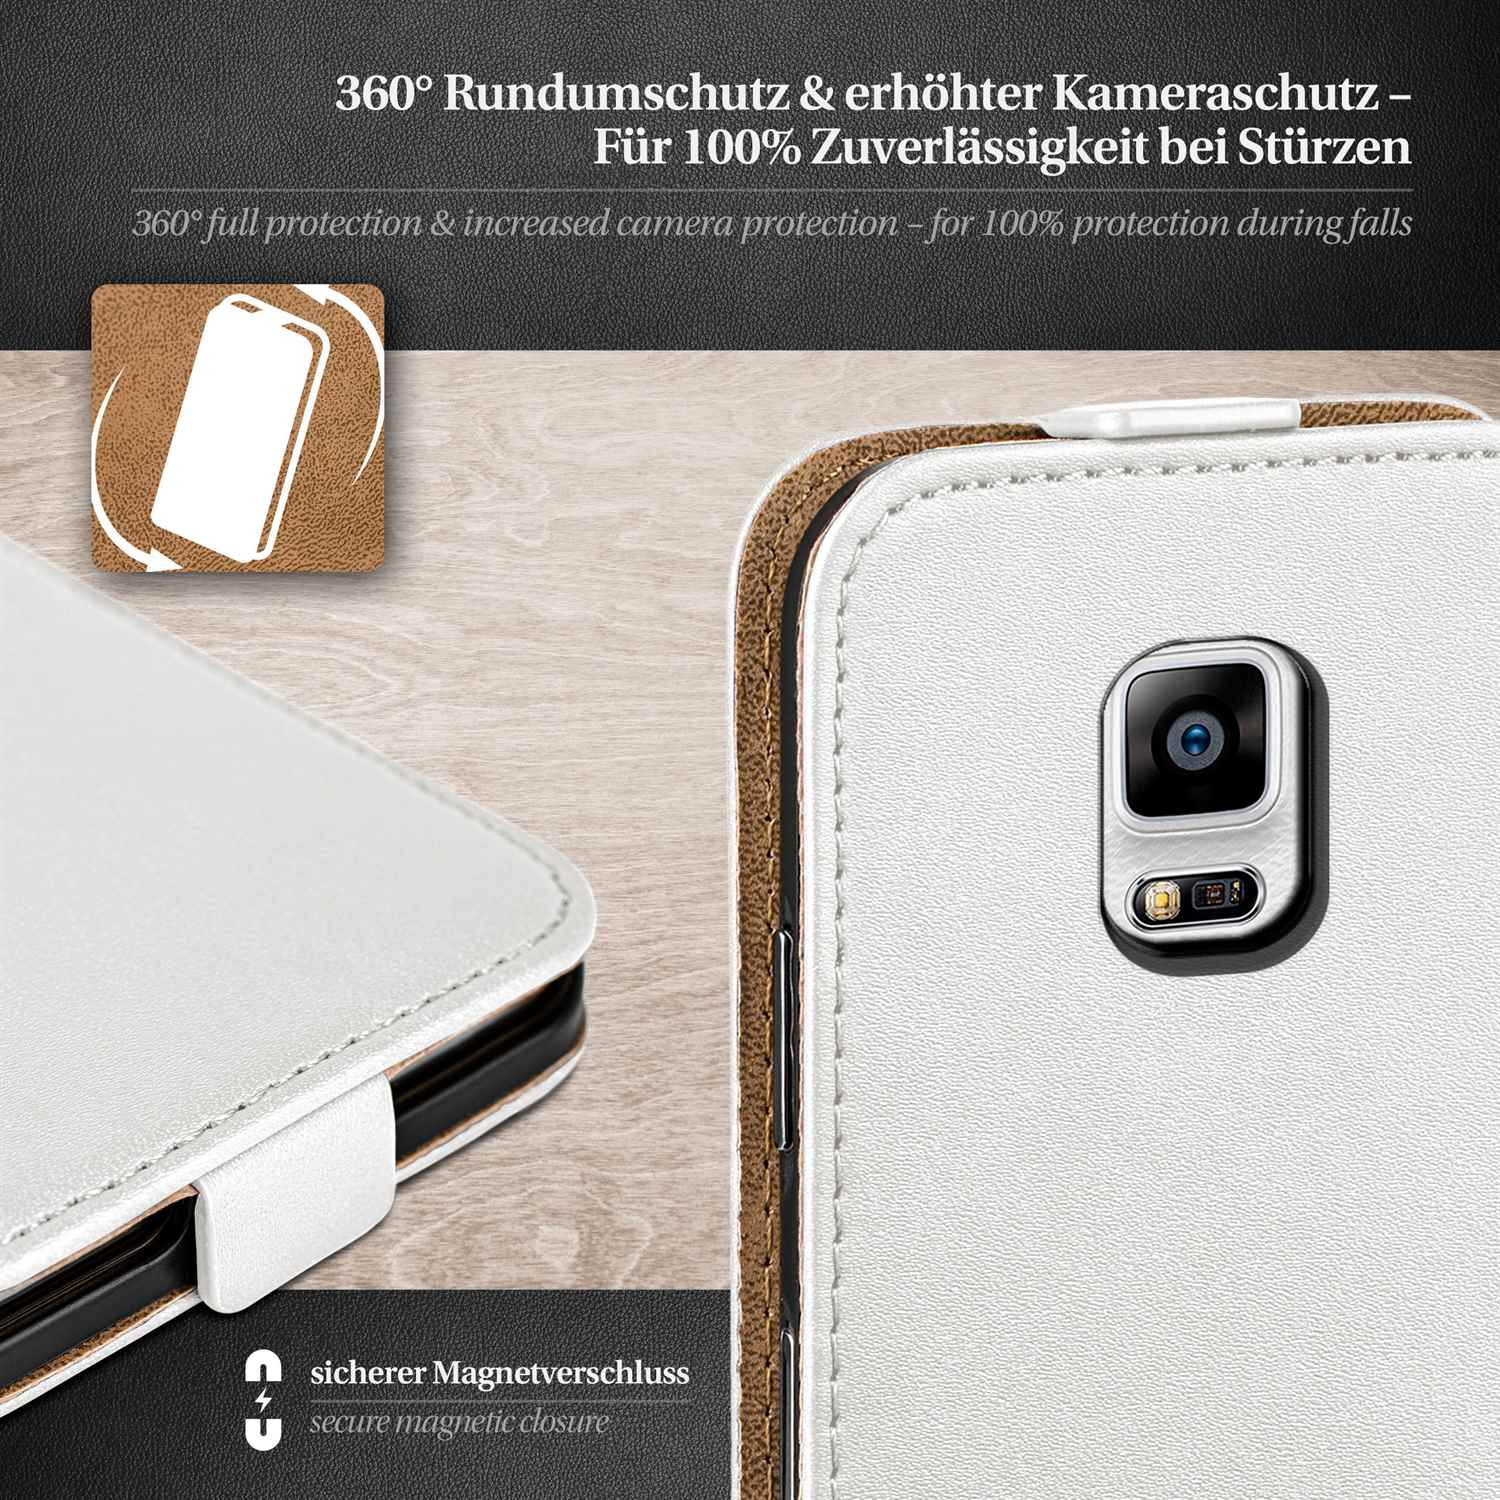 Cover, Flip Galaxy MOEX 4, Note Pearl-White Case, Flip Samsung,